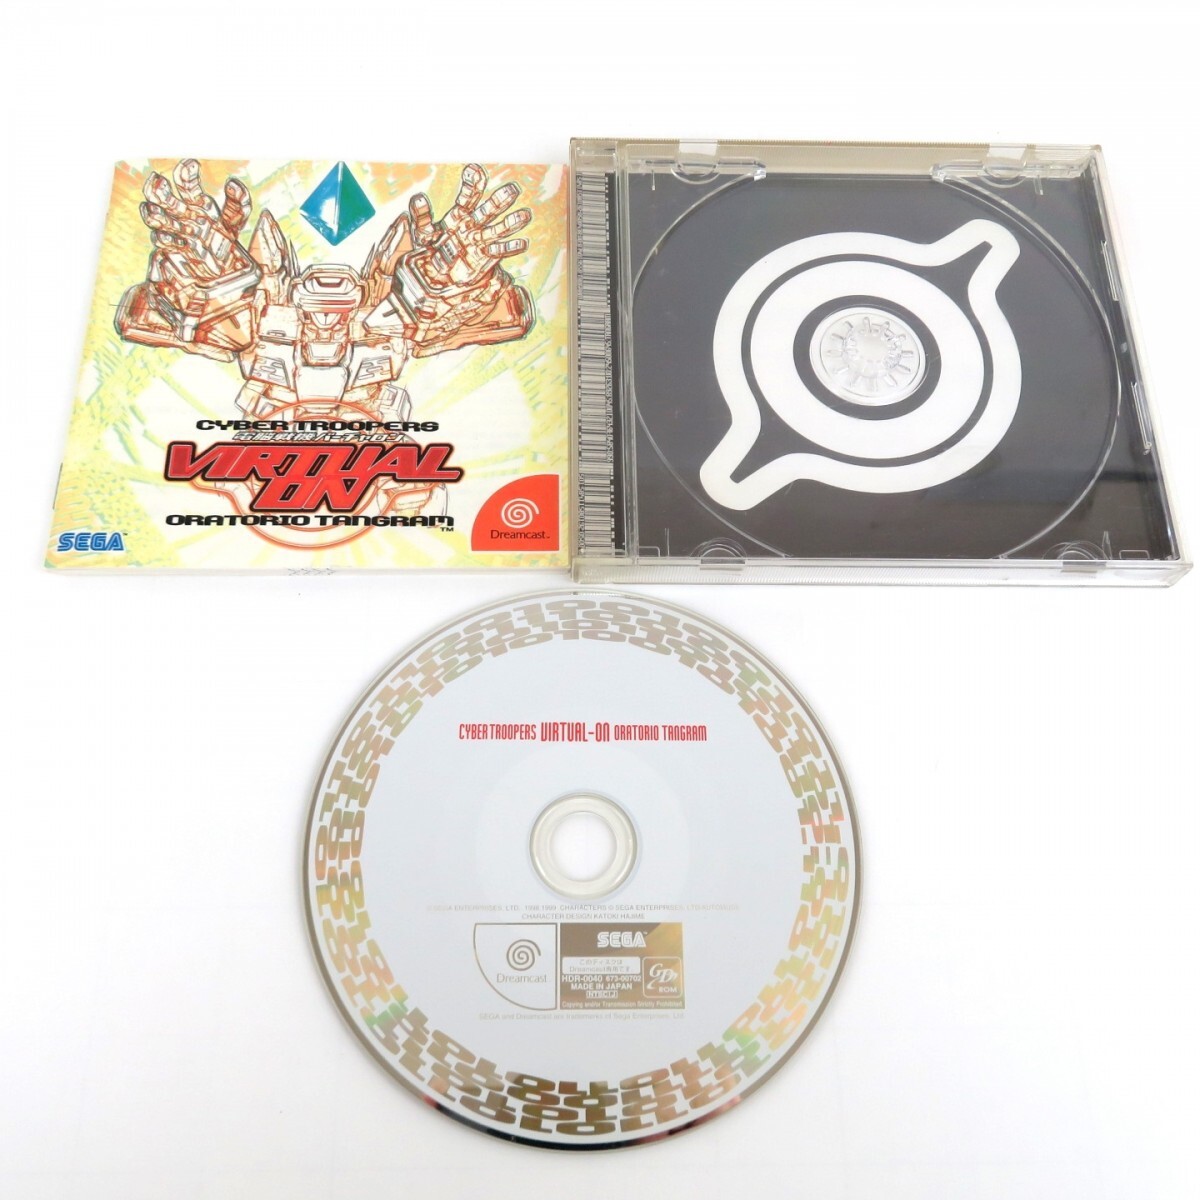  summarize 5 point Dreamcast soft Vaio hazard code : Velo nika The * King *ob* Fighter z electronic brain war machine Virtual-On Kitty 0520-002